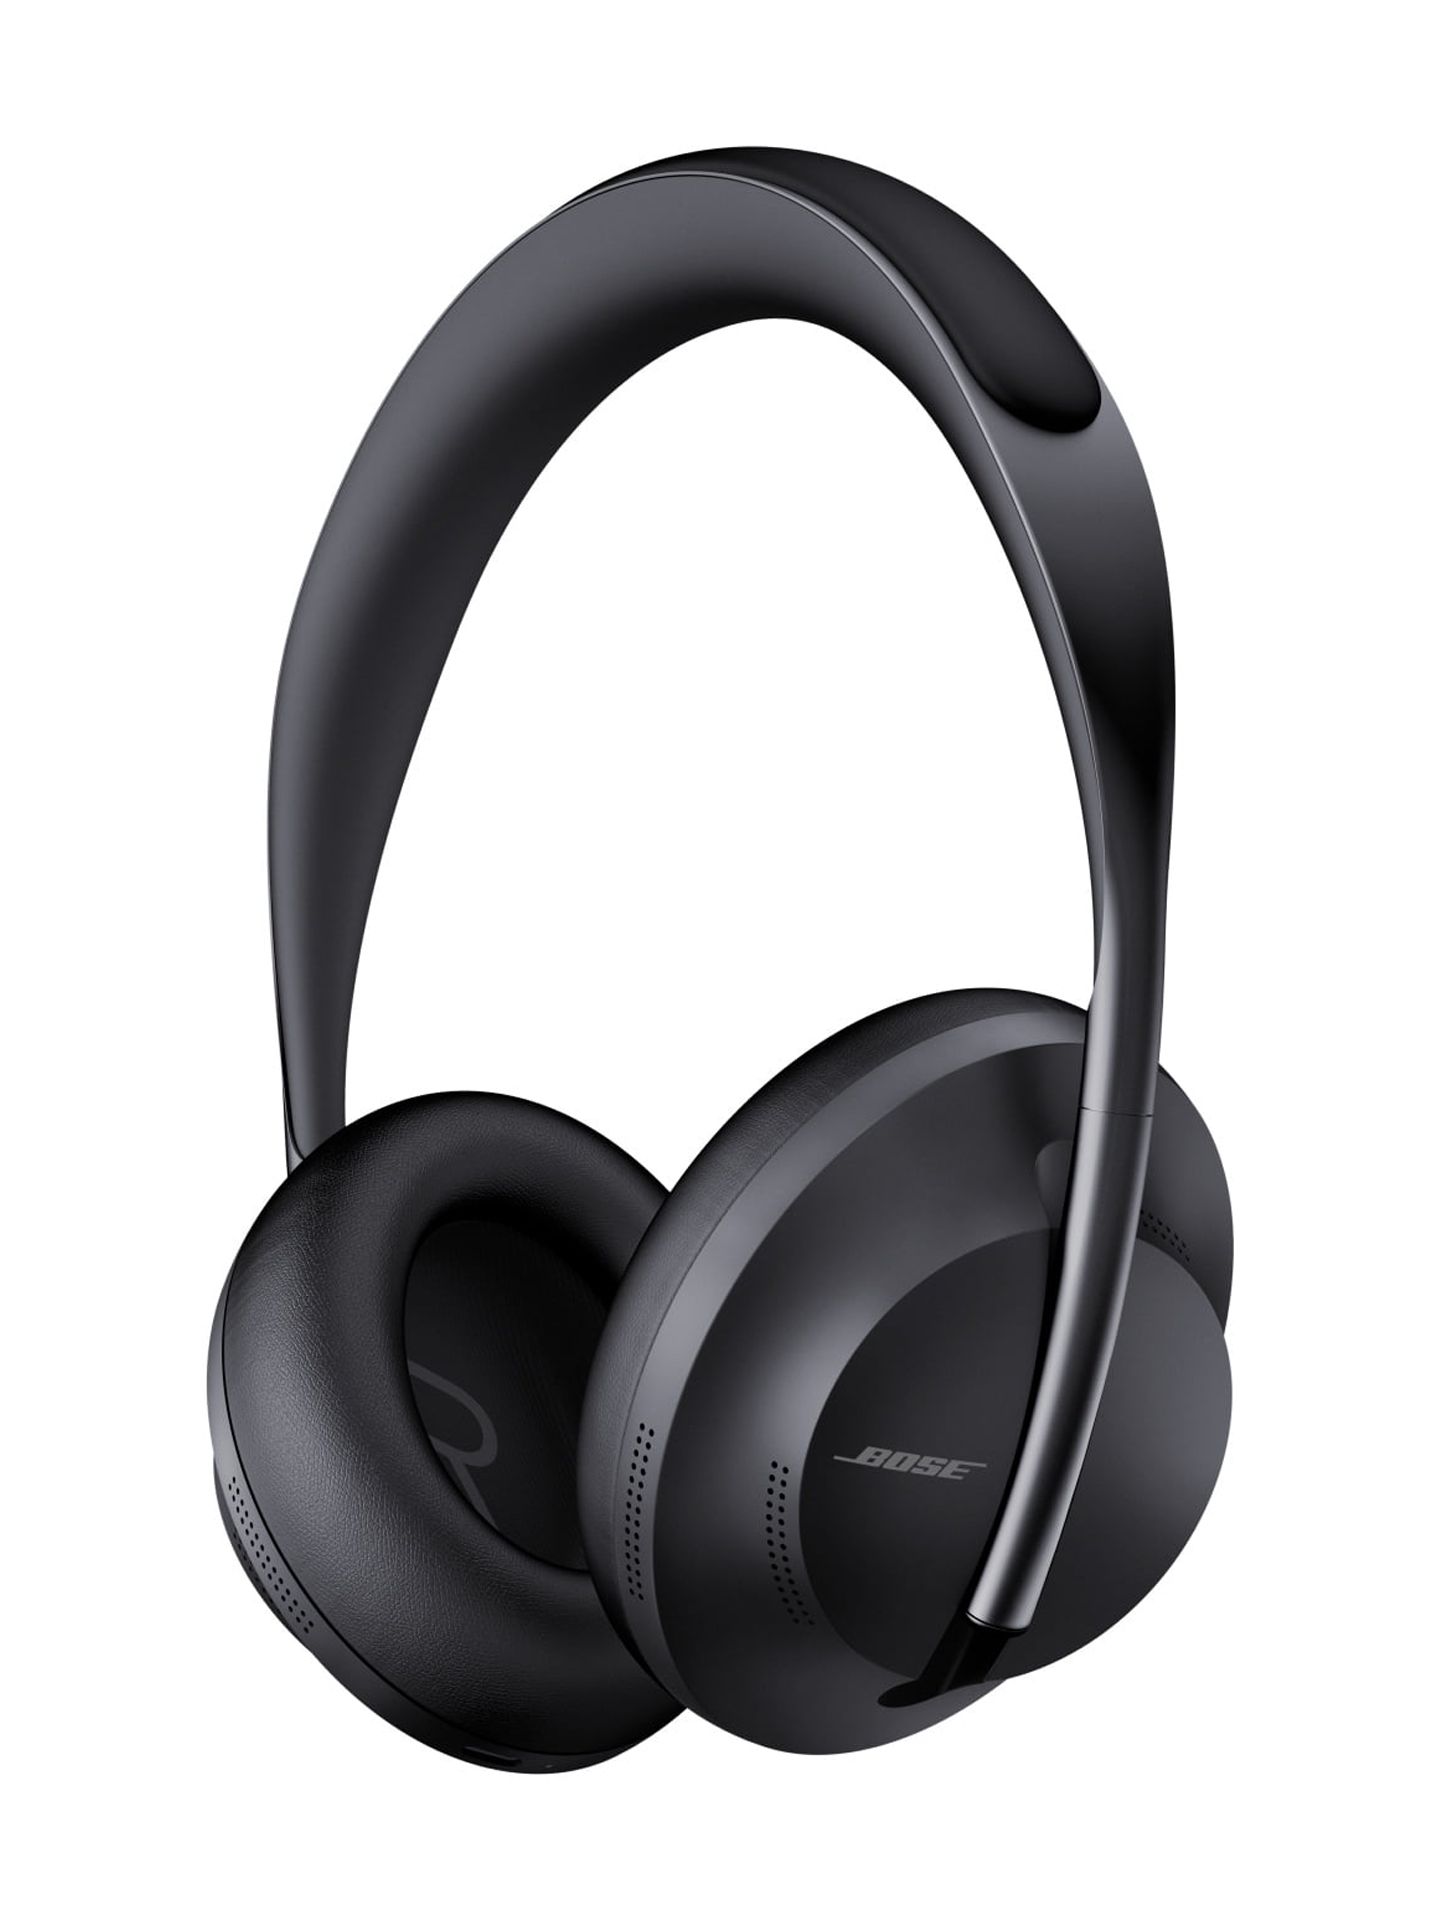 Bose Noise Cancelling Headphones 700 over-ear Wireless Bluetooth Earphones, Black - image 1 of 12